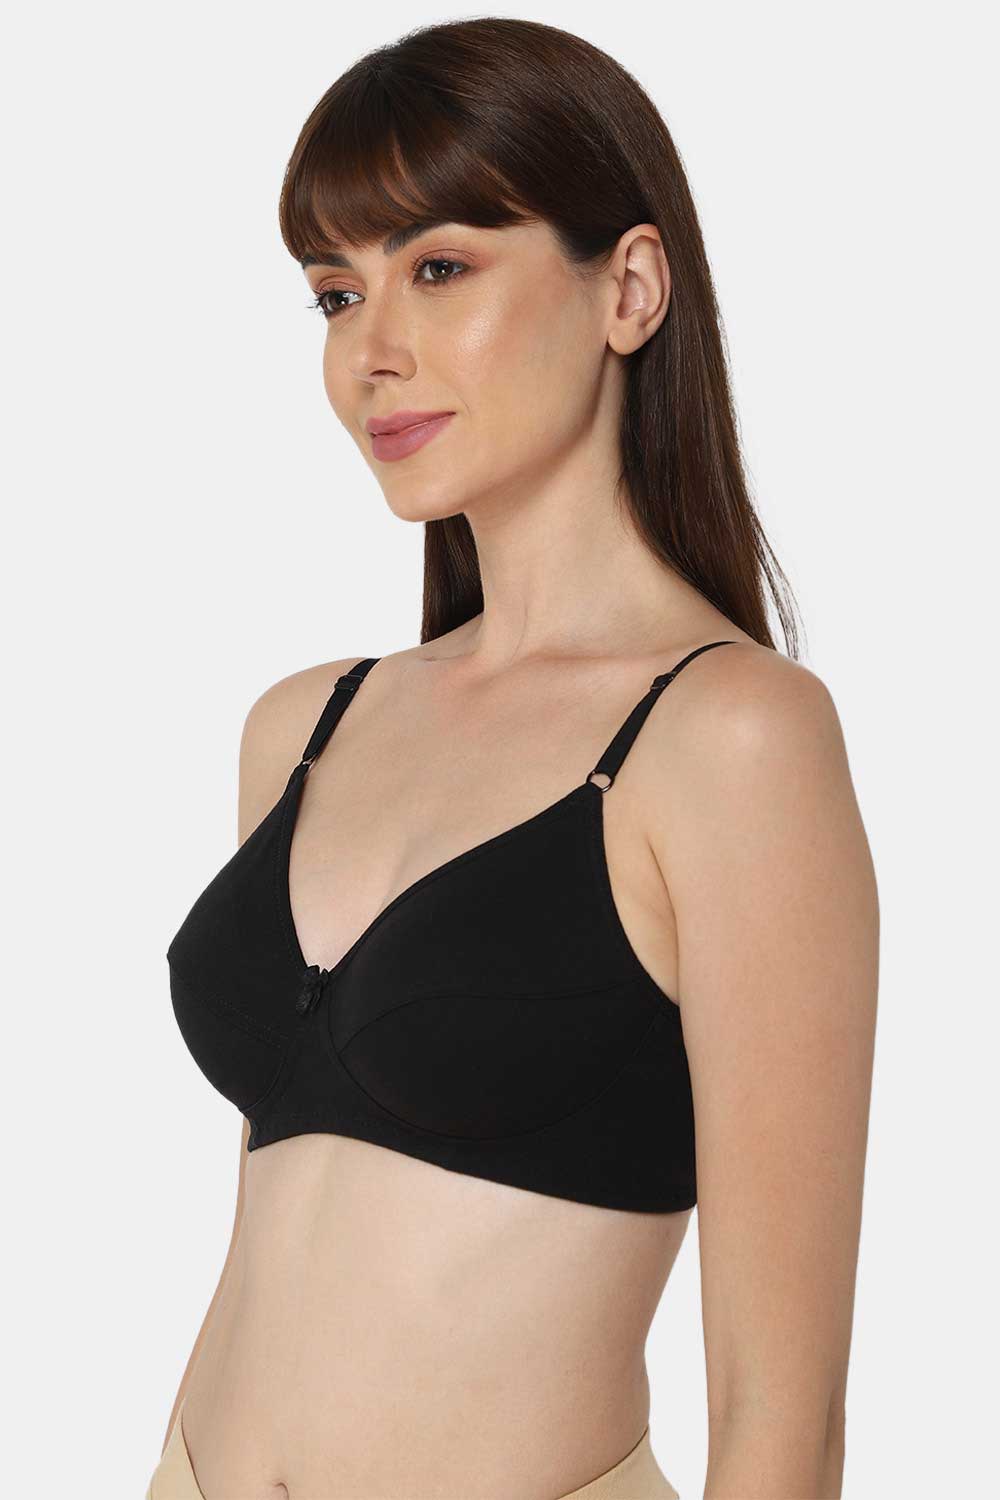 Ladies bra corner - Cotton bra size 36 to 44